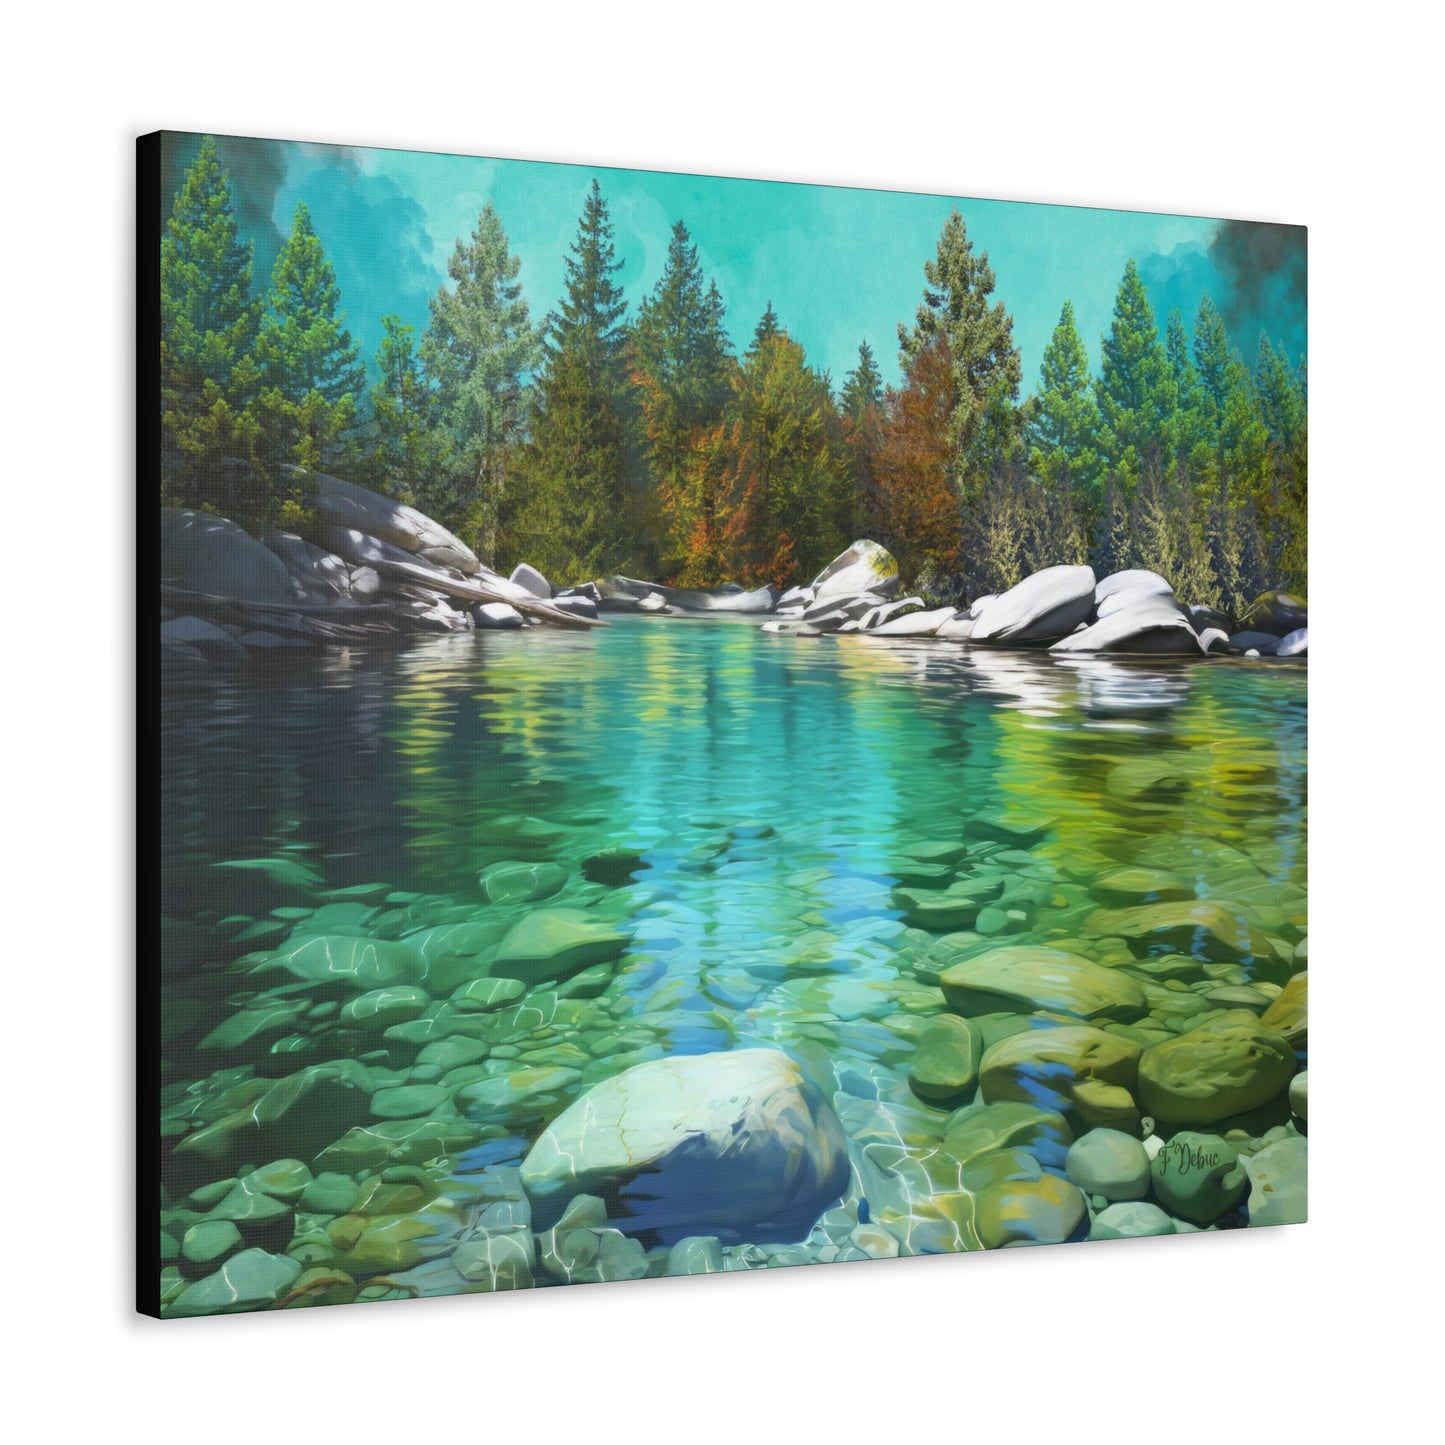 Turquoise Lake – Canvas Wall Art